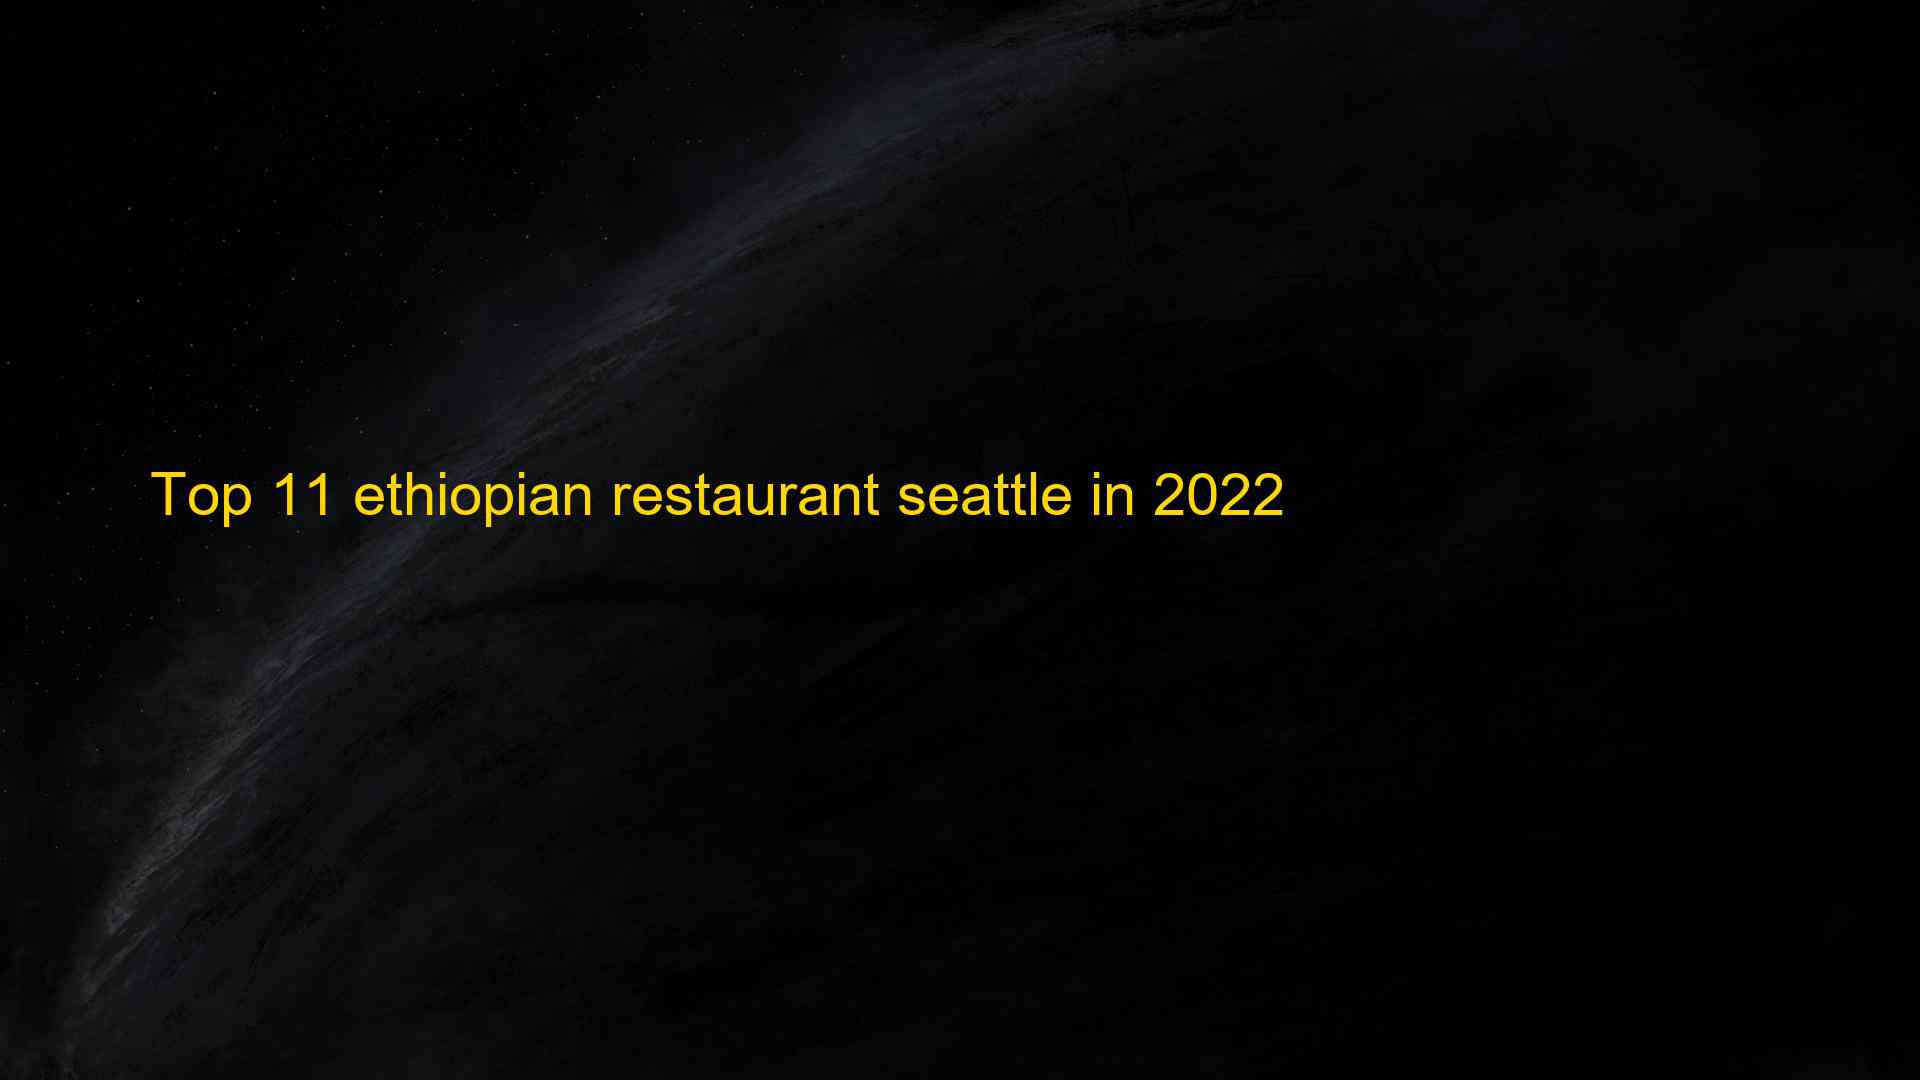 Top 11 ethiopian restaurant seattle in 2022 1662831923